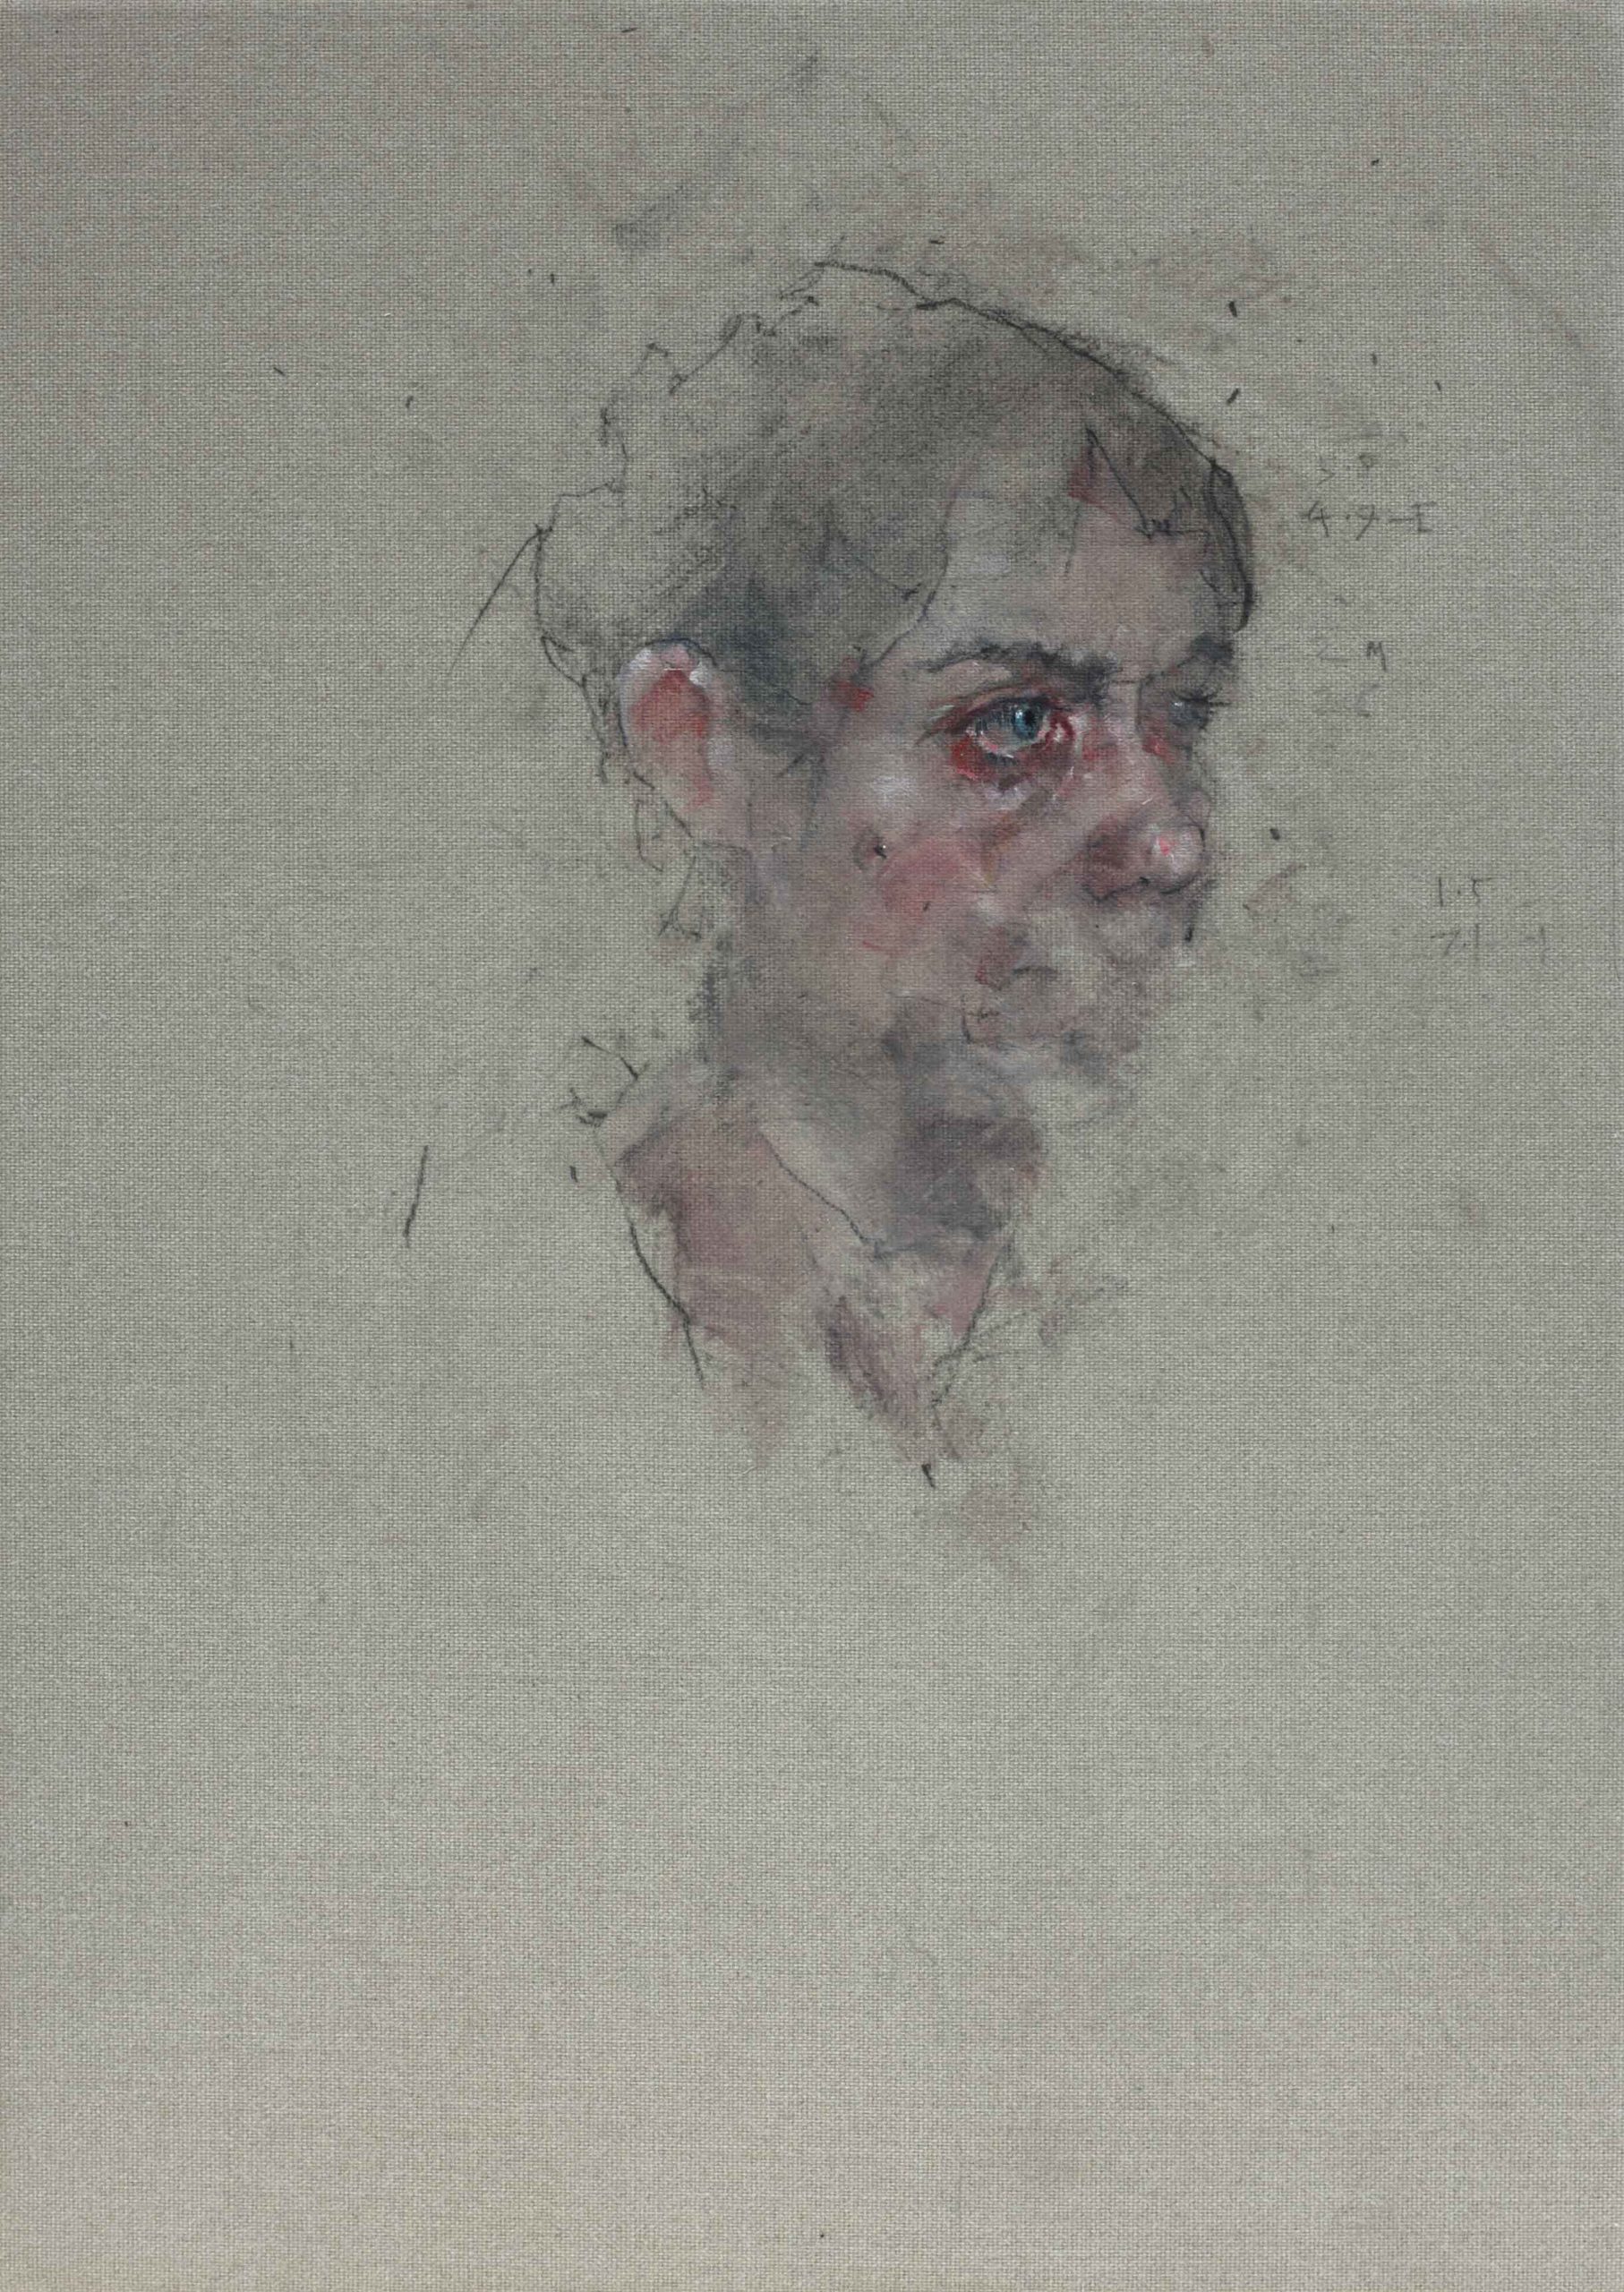 Nathan Ford, "Anna 11.12," 20 x 28 cm, Oil on canvas